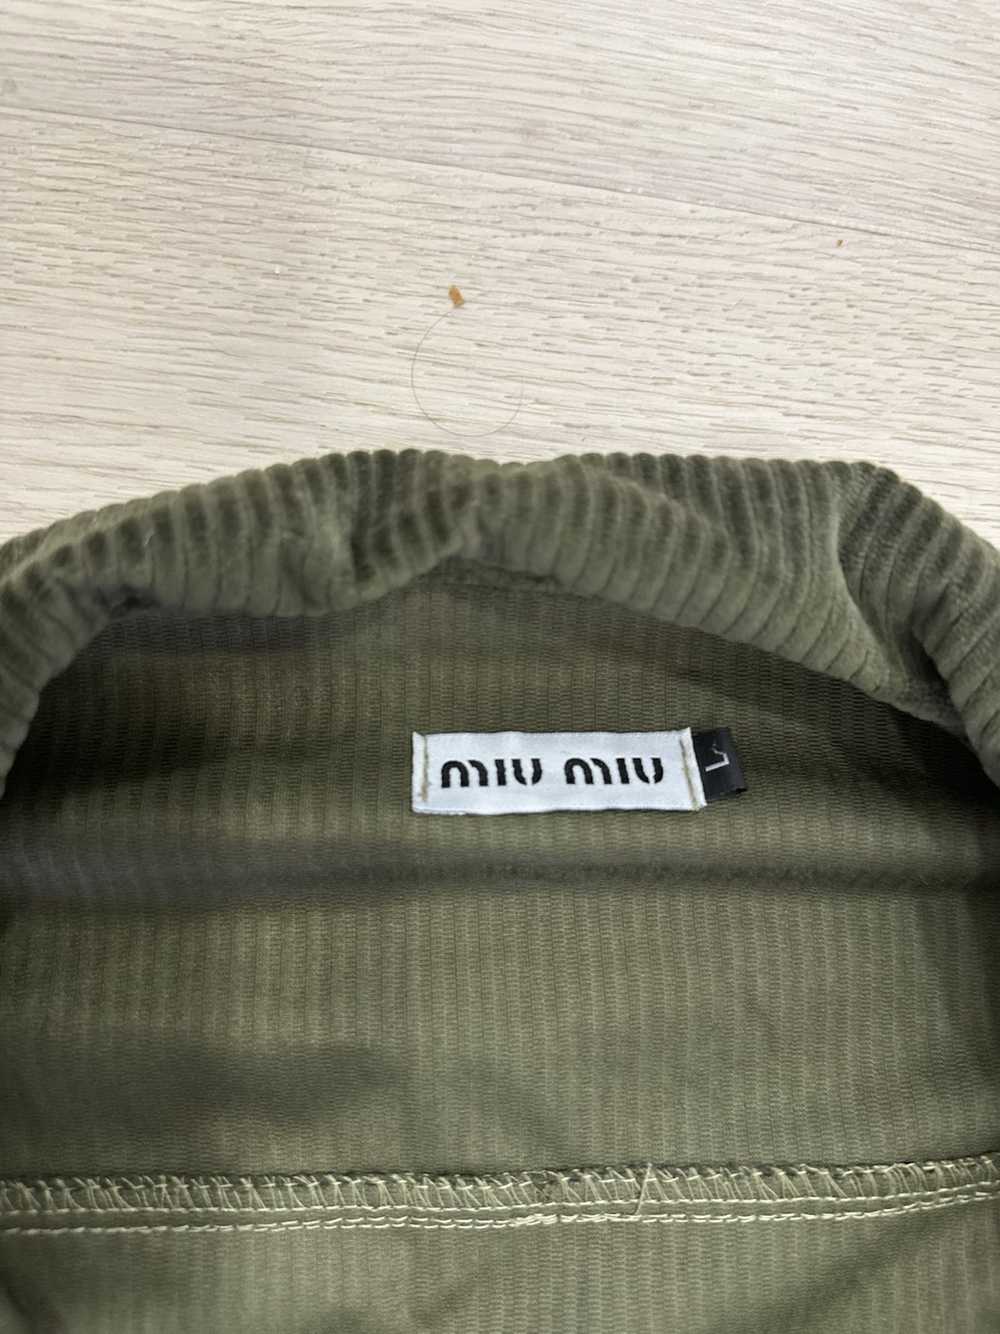 Miu Miu Vintage jacket and pants - image 4